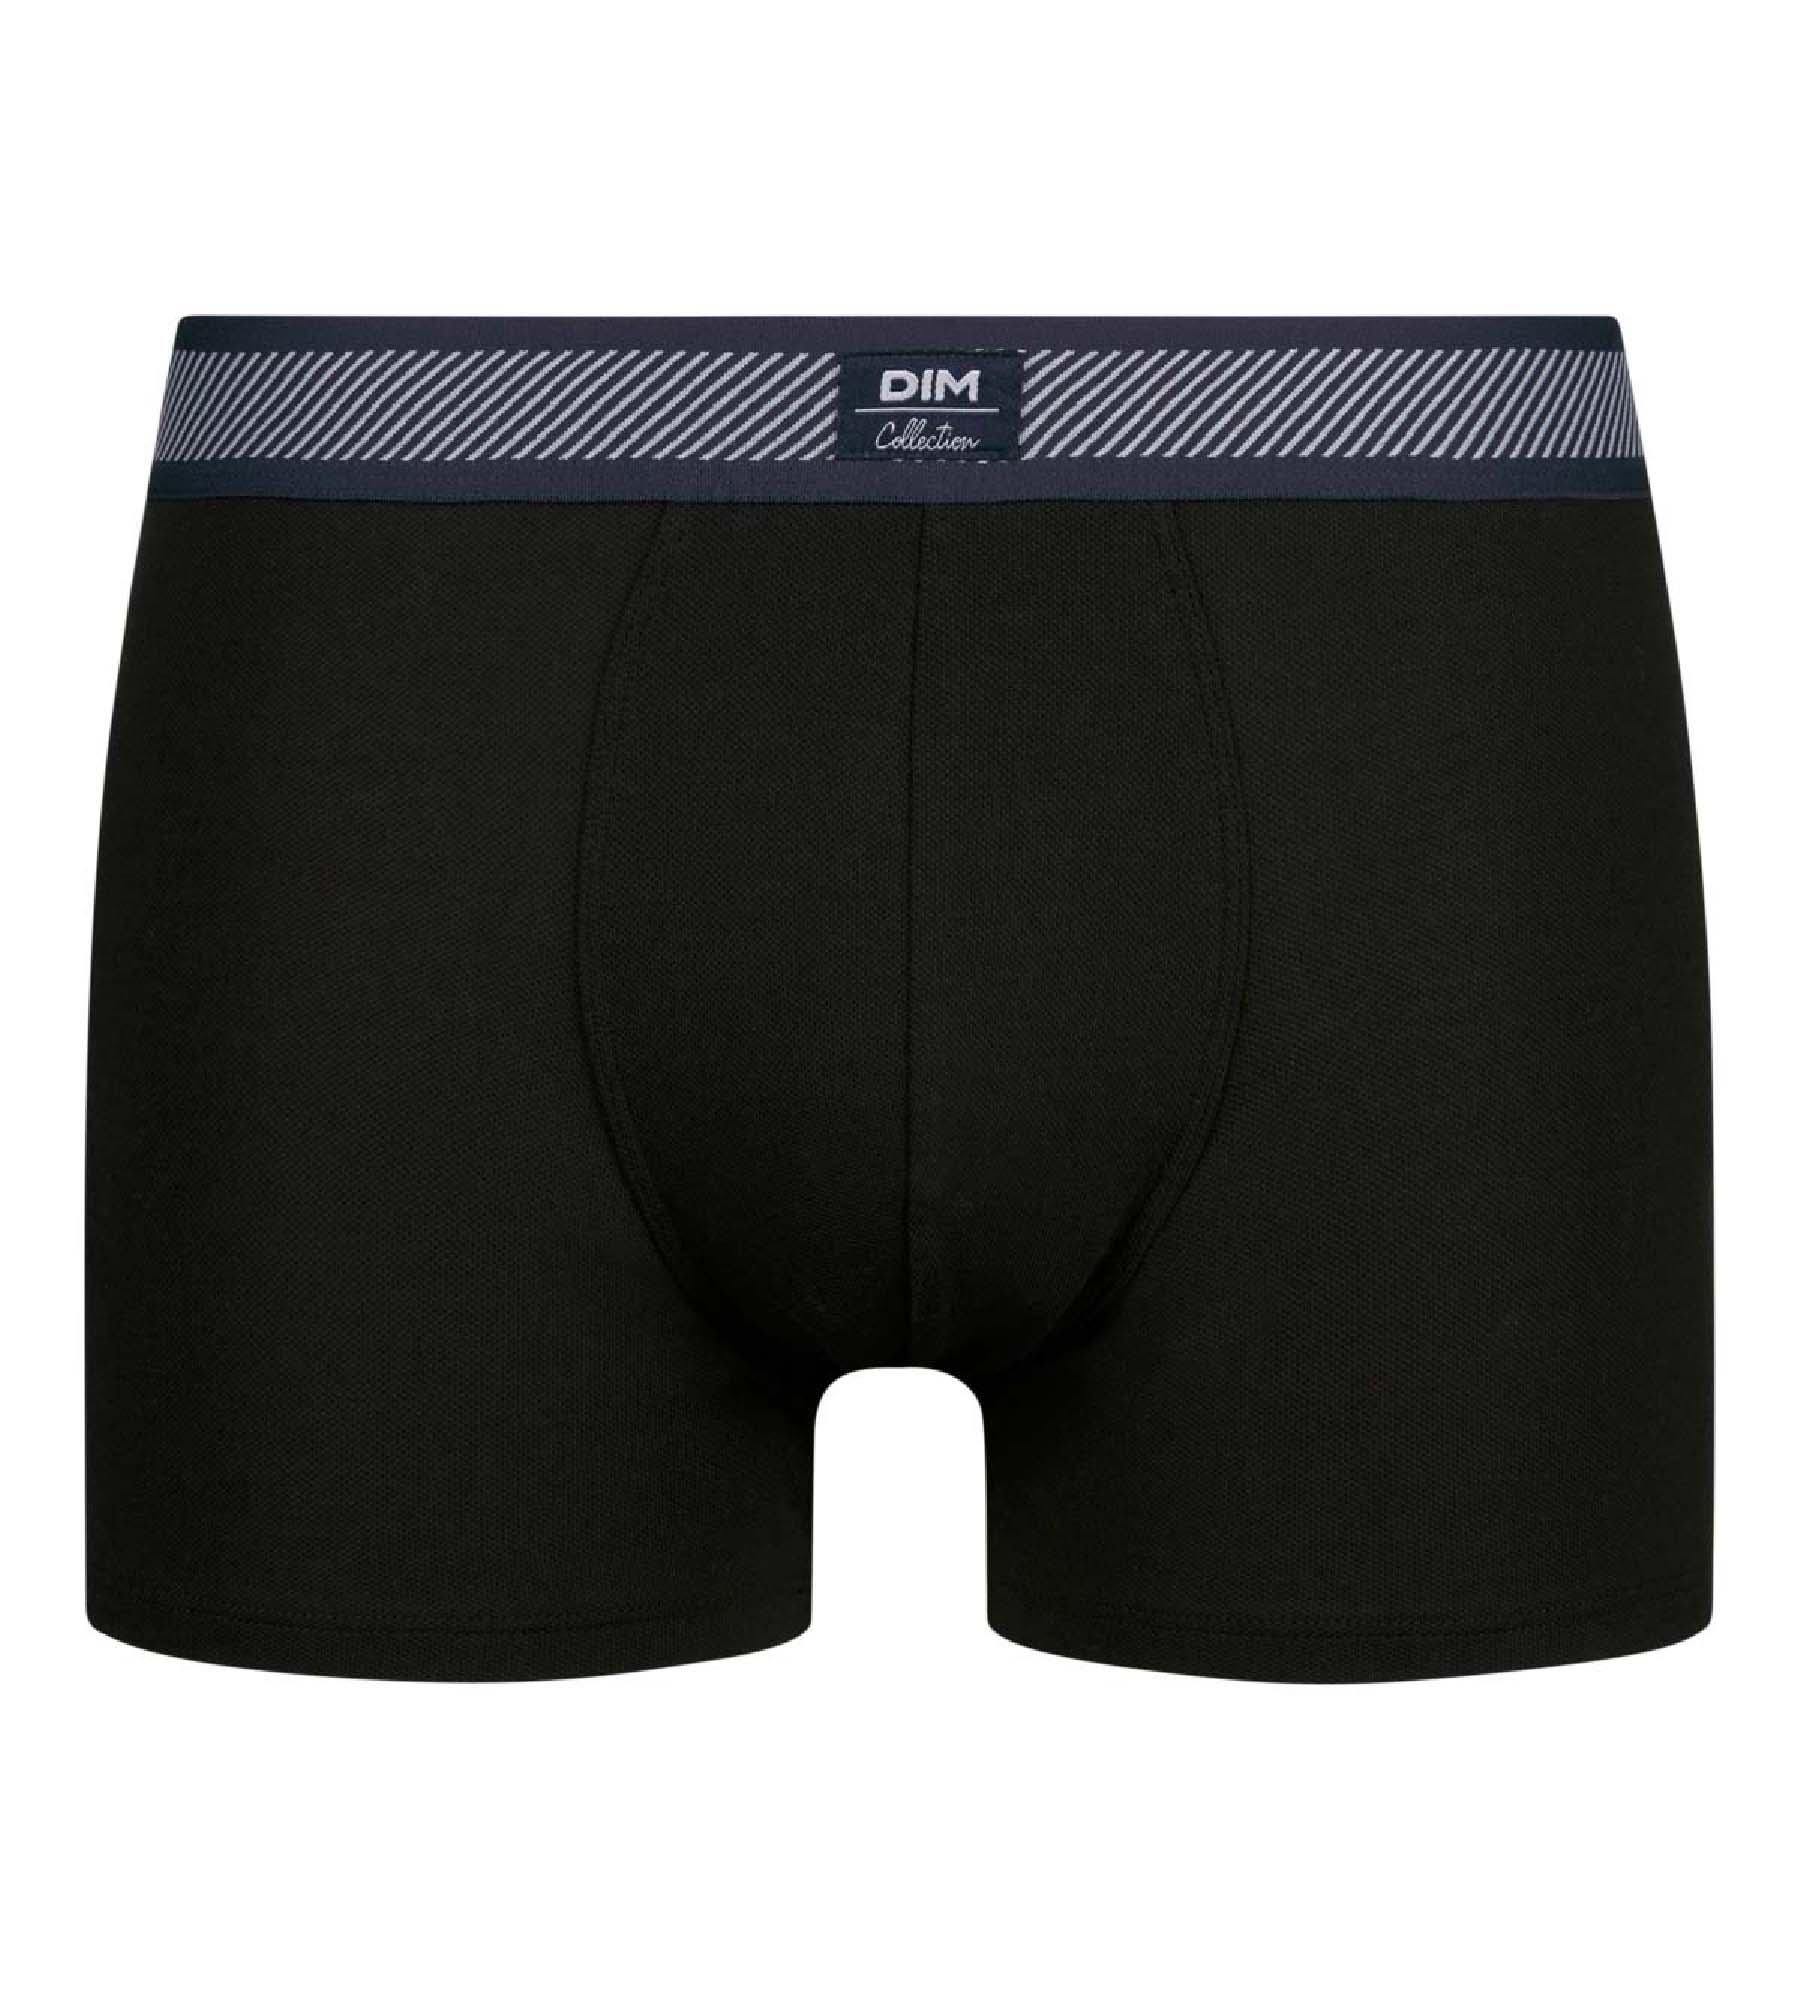 $29 HOM Underwear Men Black Cotton Modal Stretch HO1 Mini Brief